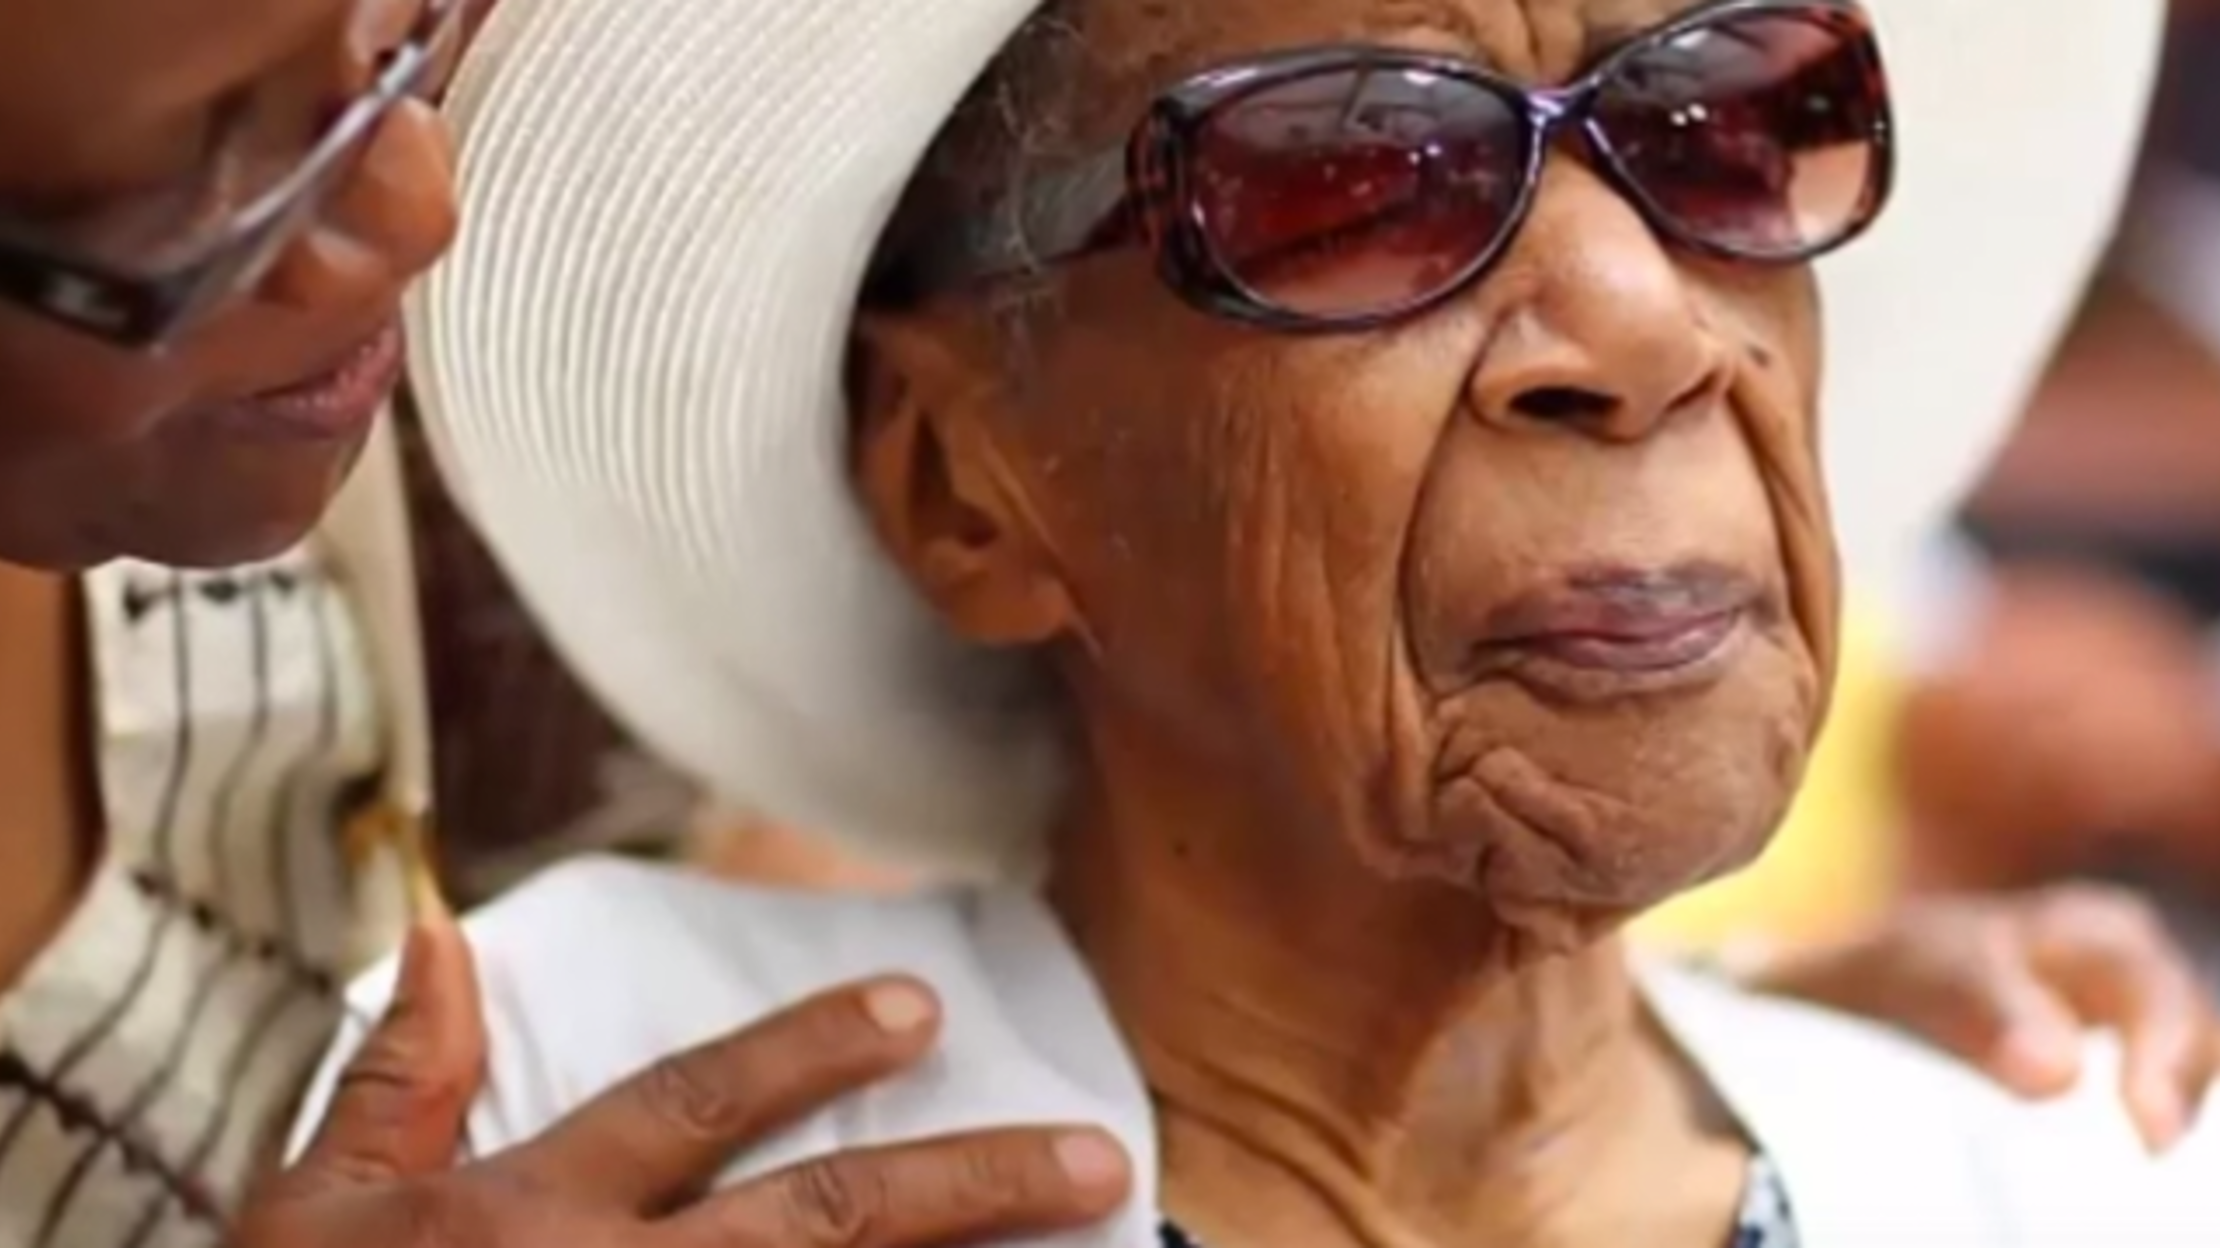 Worlds Oldest Person Susannah Mushatt Jones Dies At 116 Years Old 